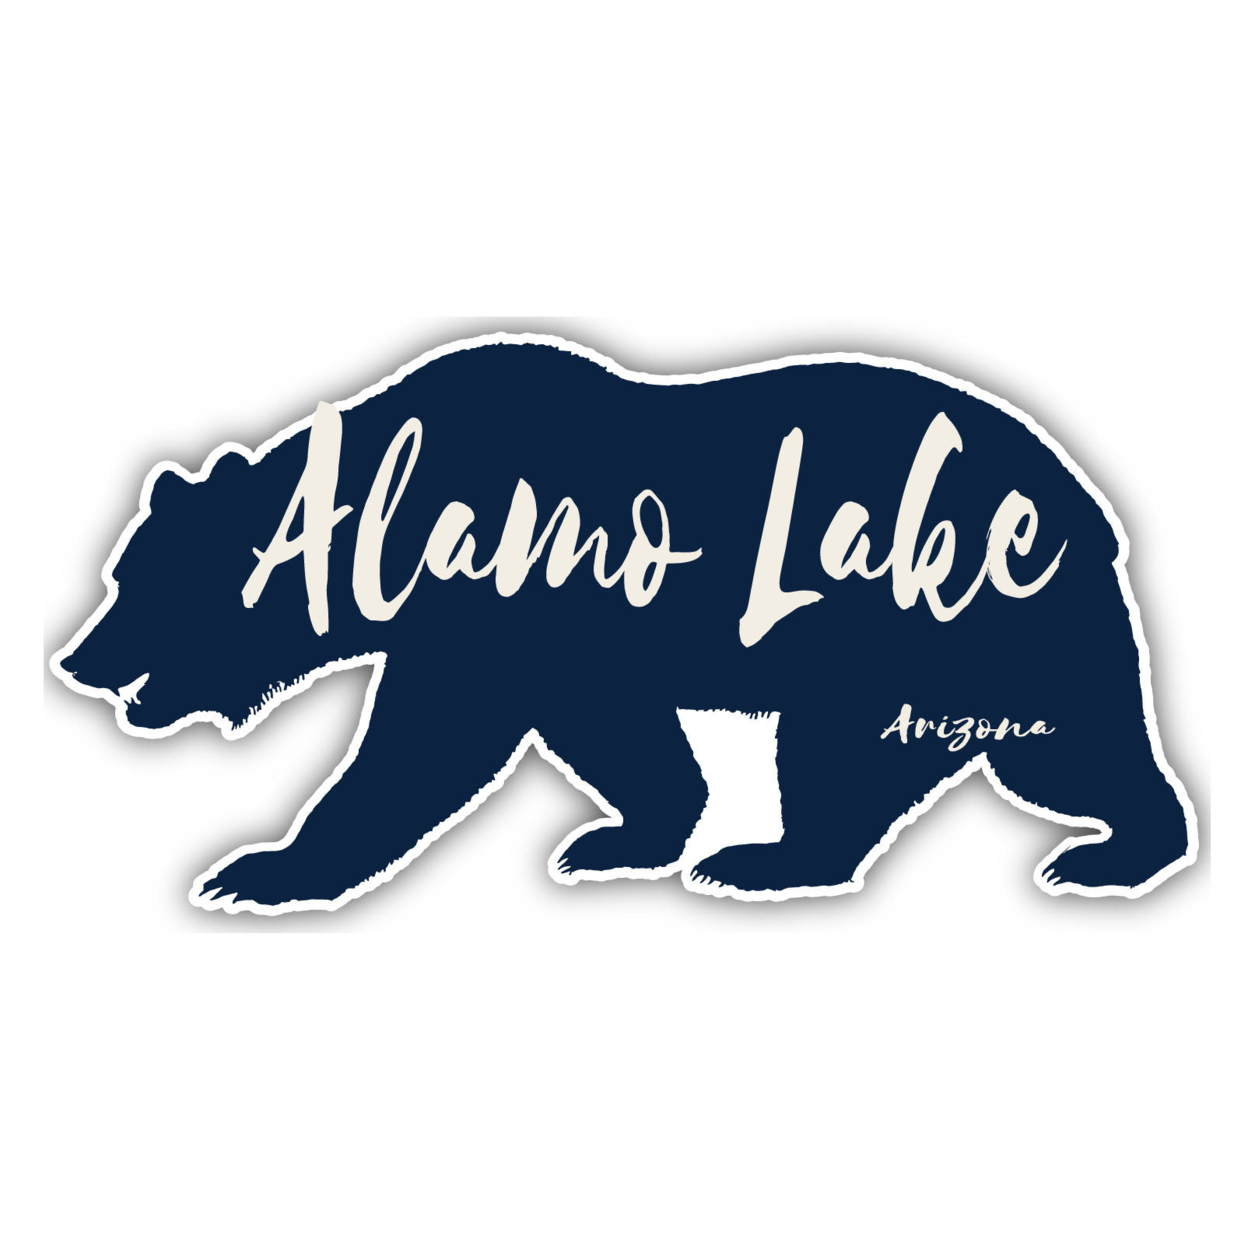 Alamo Lake Arizona Souvenir Decorative Stickers (Choose Theme And Size) - 4-Pack, 6-Inch, Camp Life